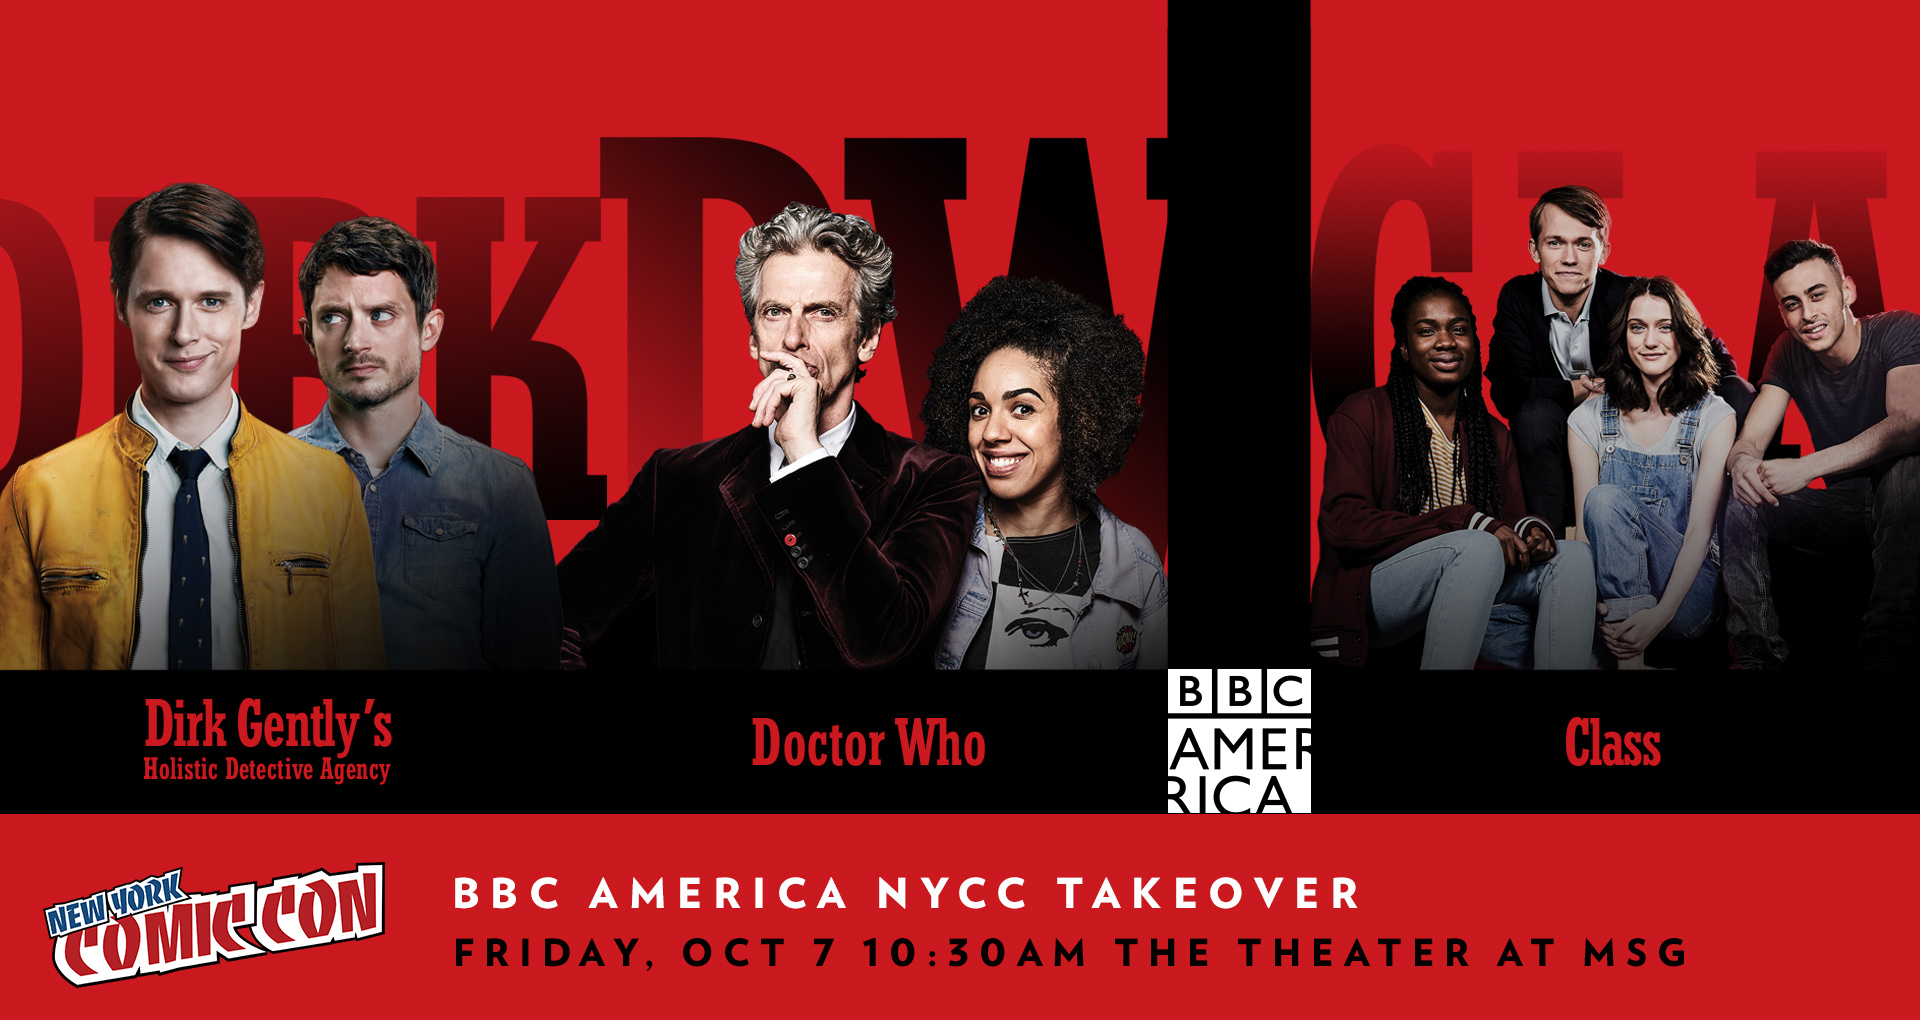 NYCC 2016: BBC America Takeover At New York Comic Con